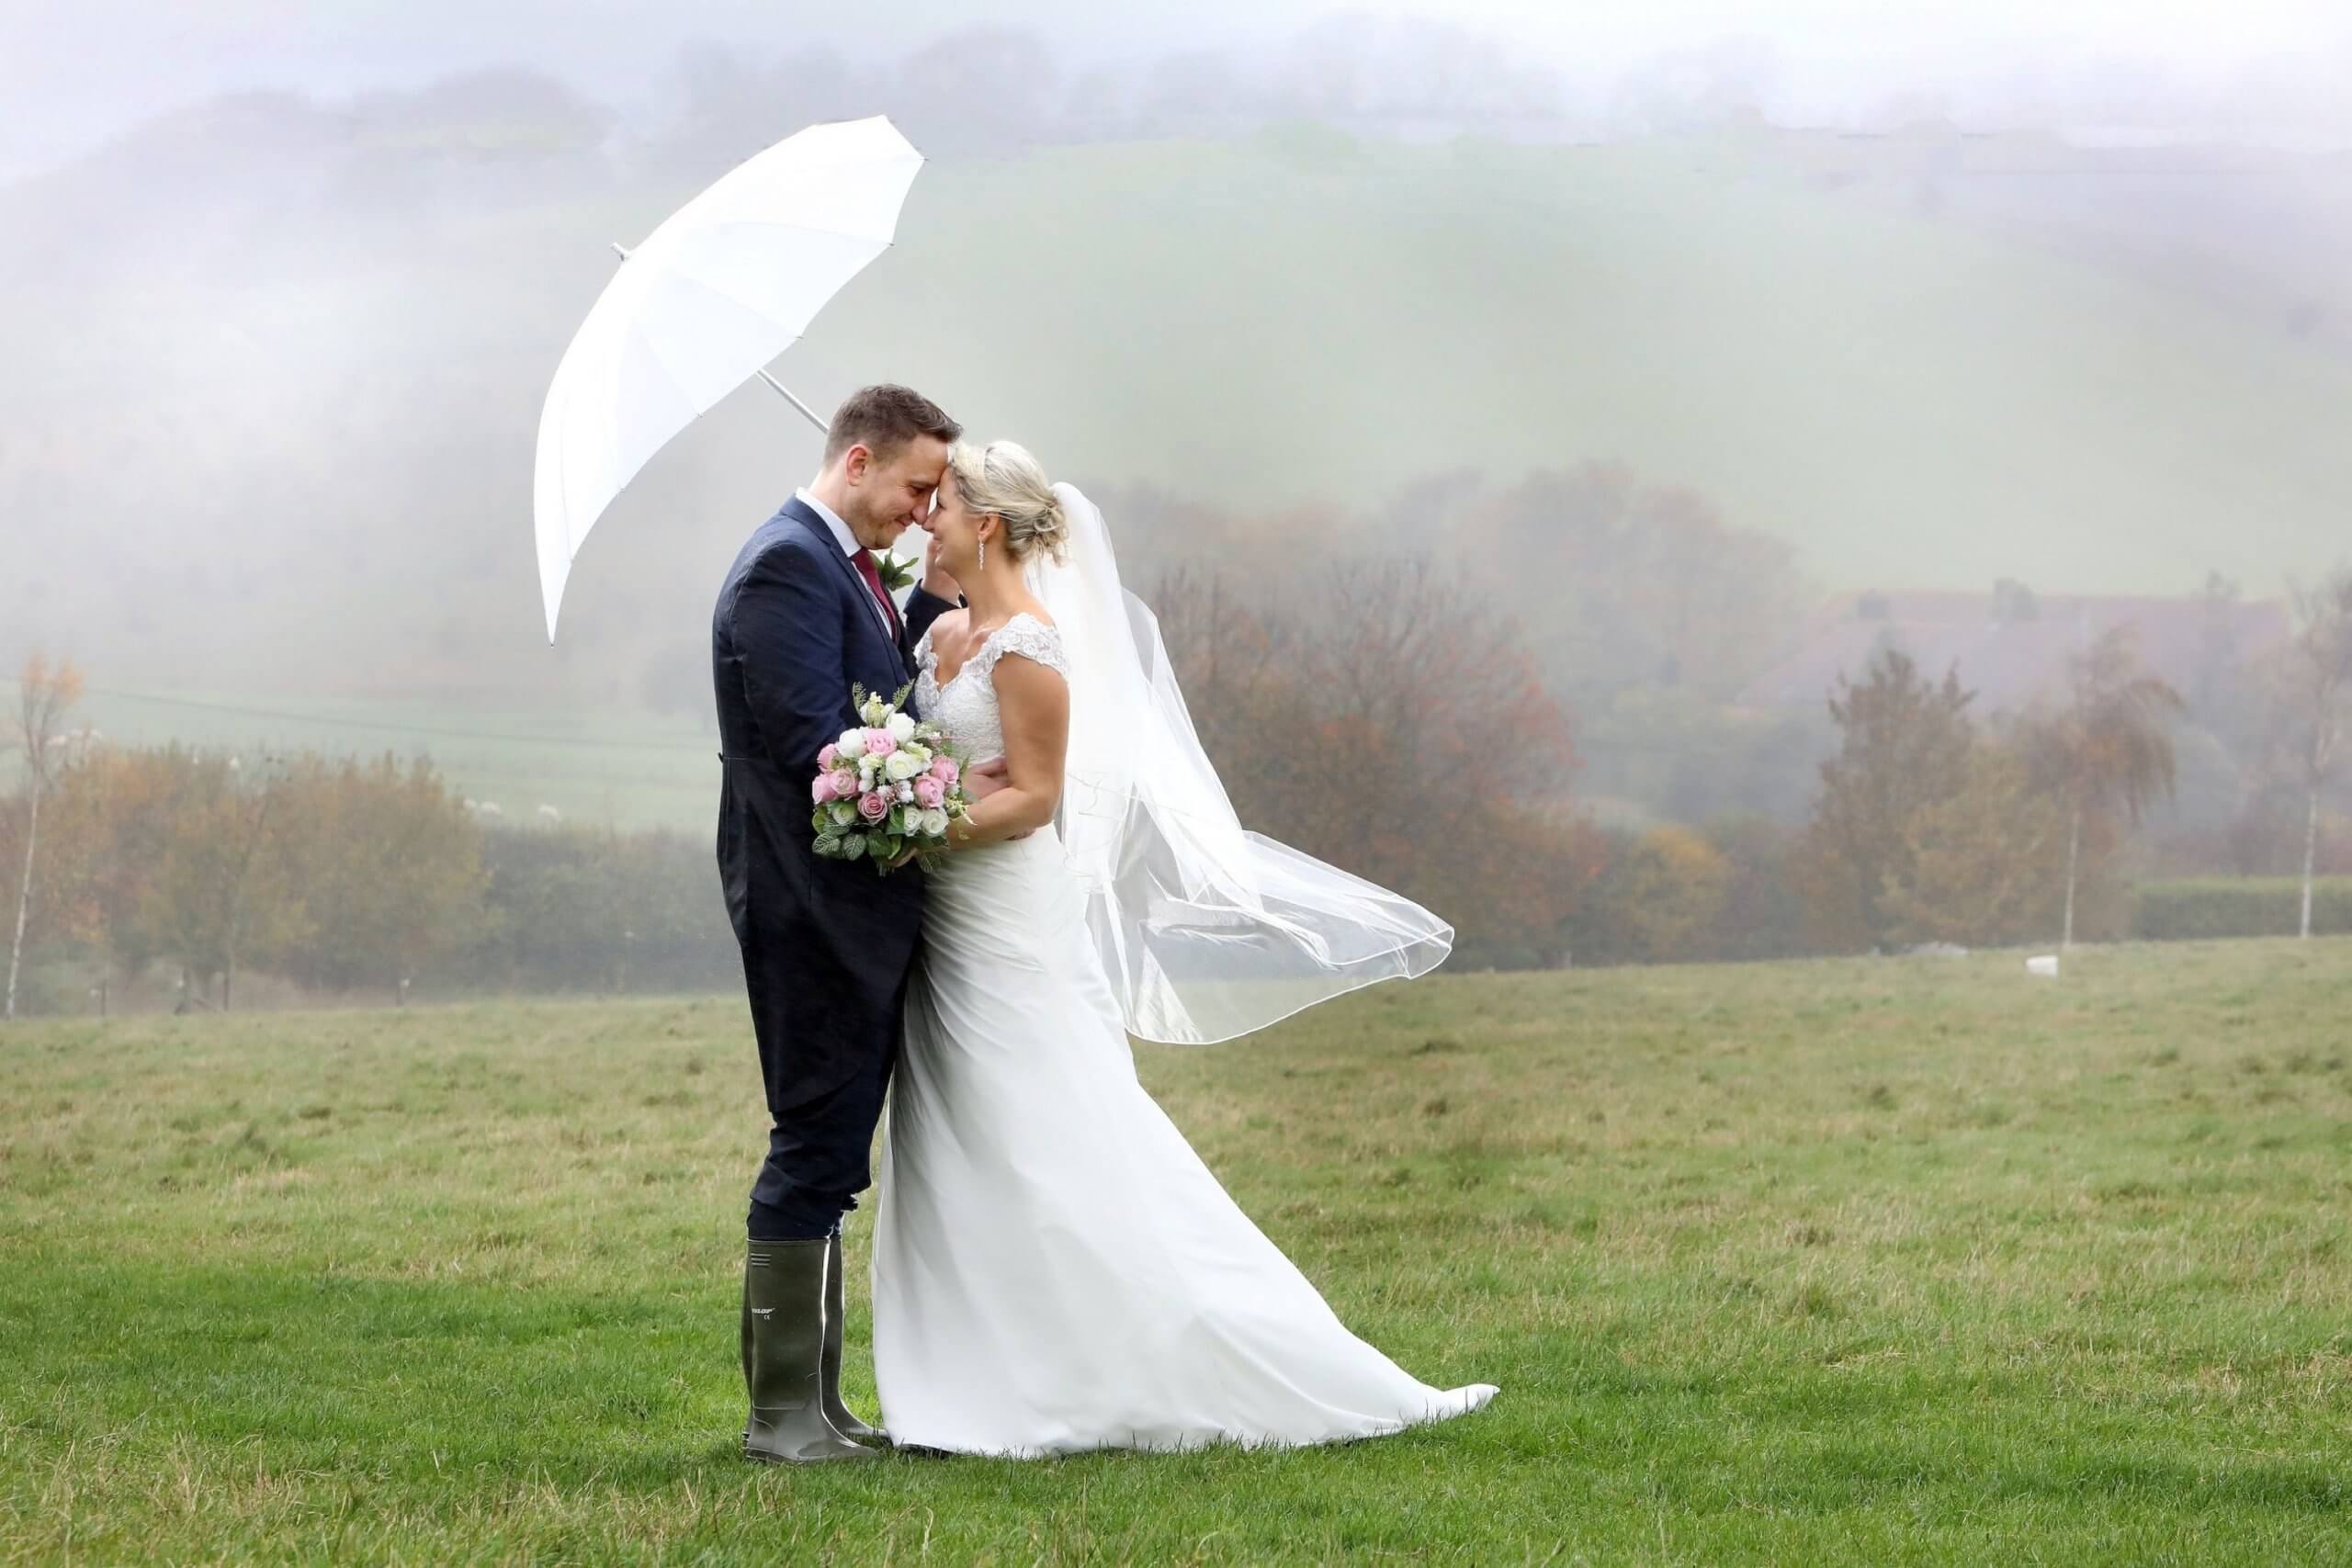 Wedding photographer Upwaltham Barns Winter umbrella